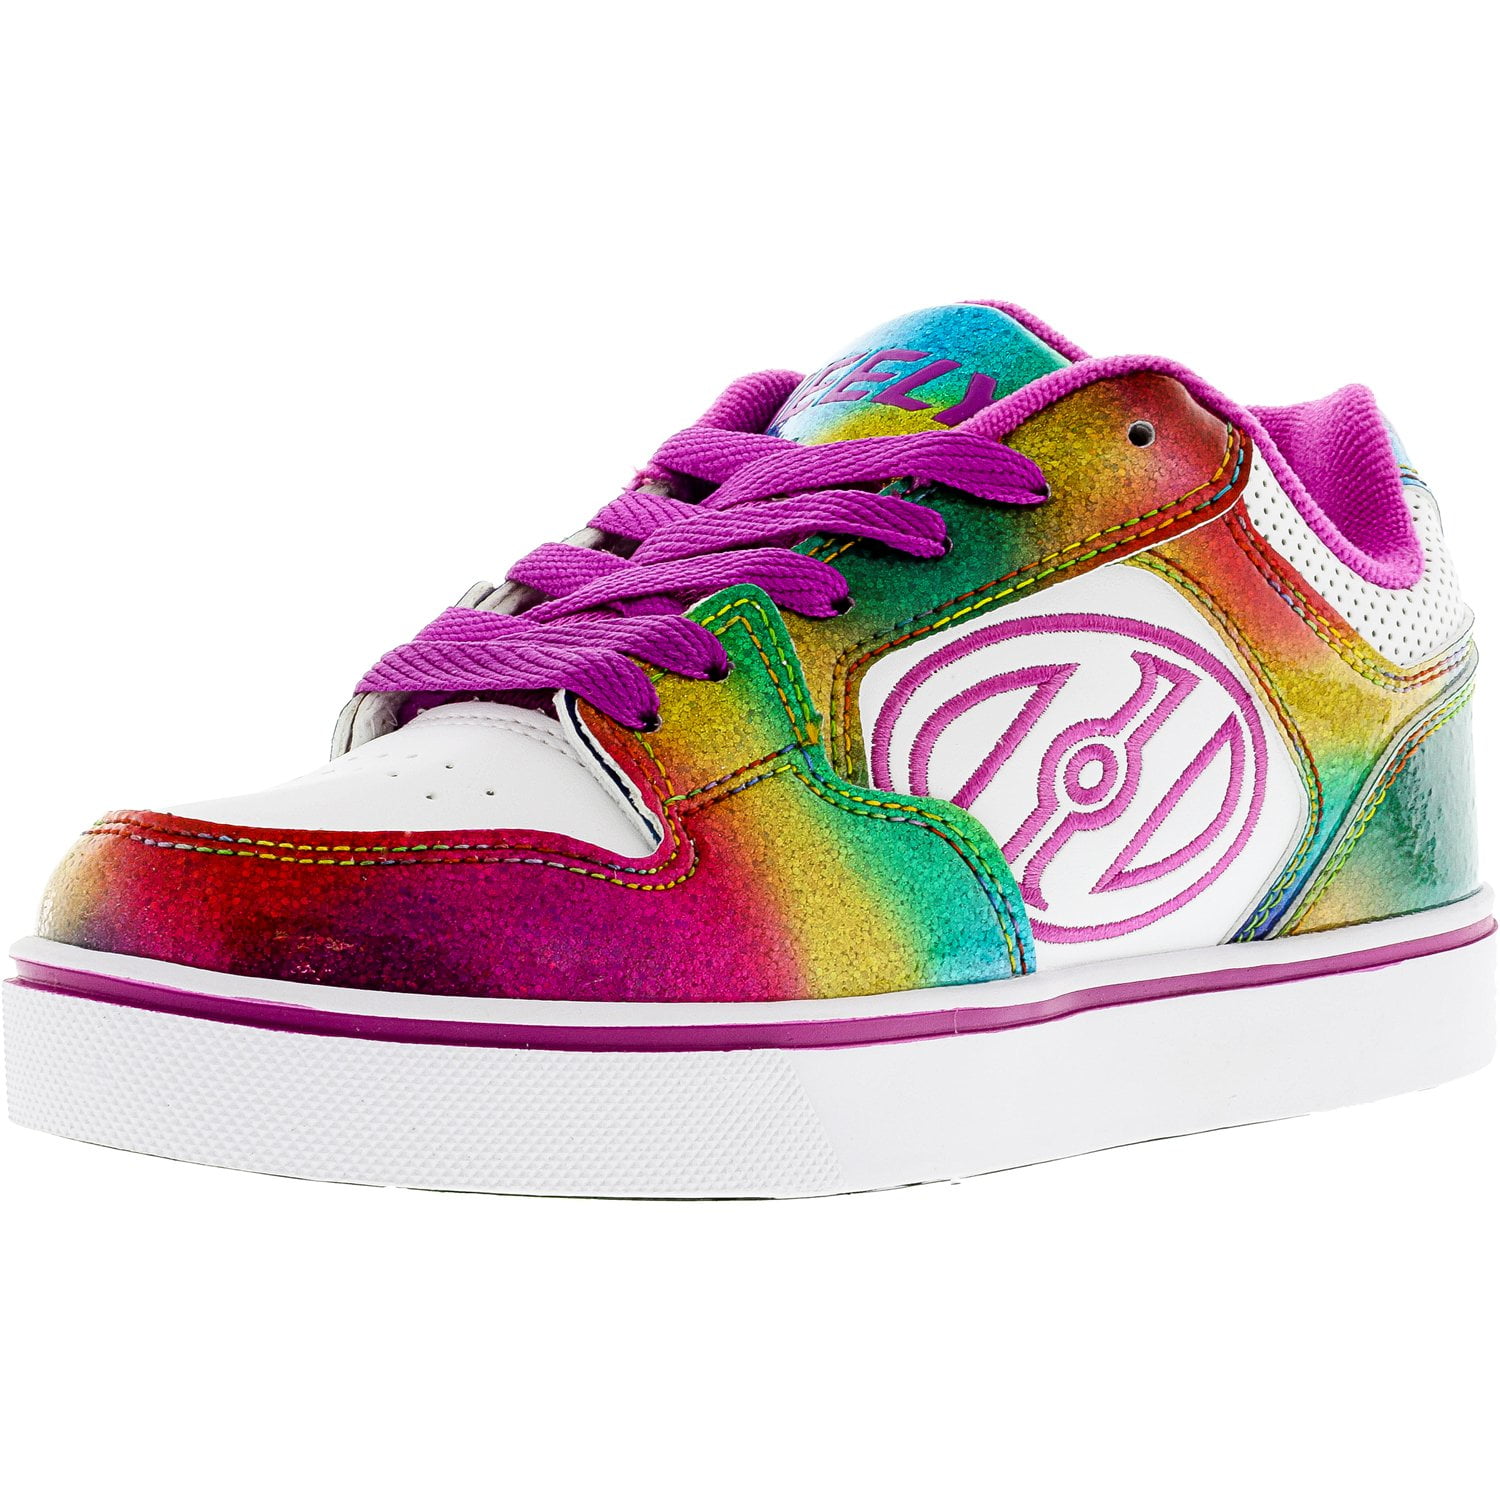 Heelys Motion Plus White//Rainbow Hot Pink Ankle-High Leather Skateboarding Shoe 9M 8M